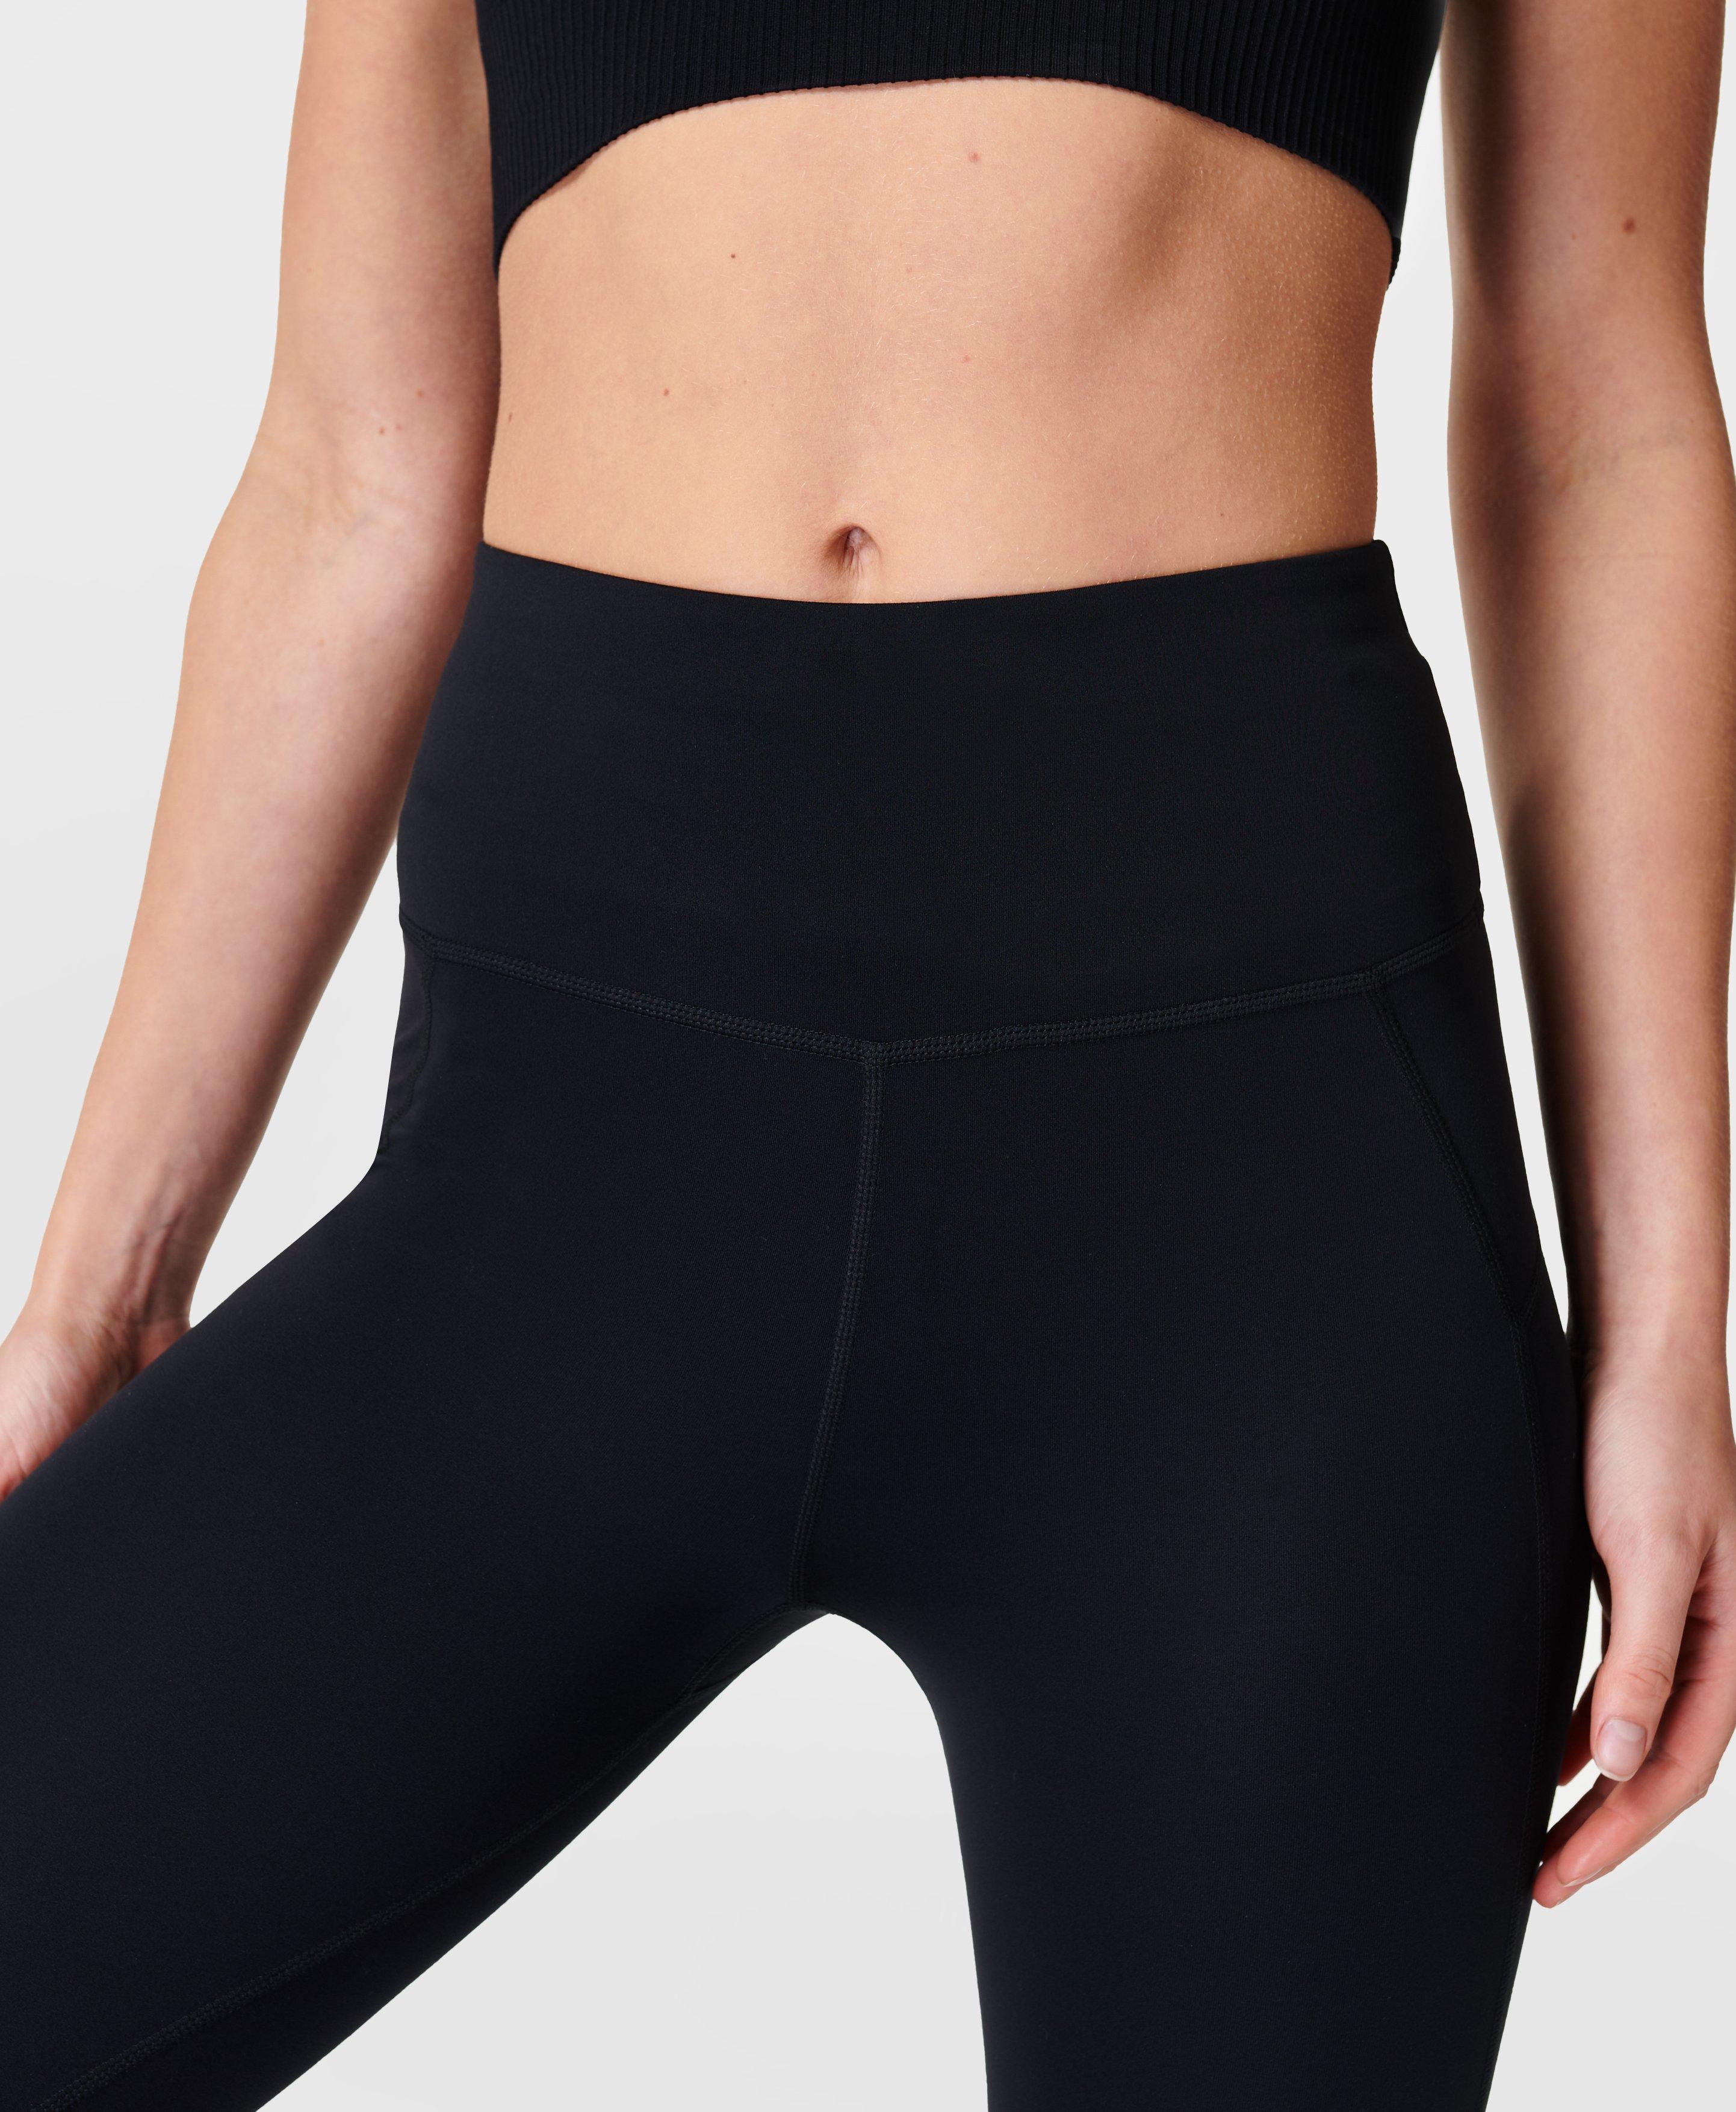 Purchase Wholesale see through yoga pants. Free Returns & Net 60